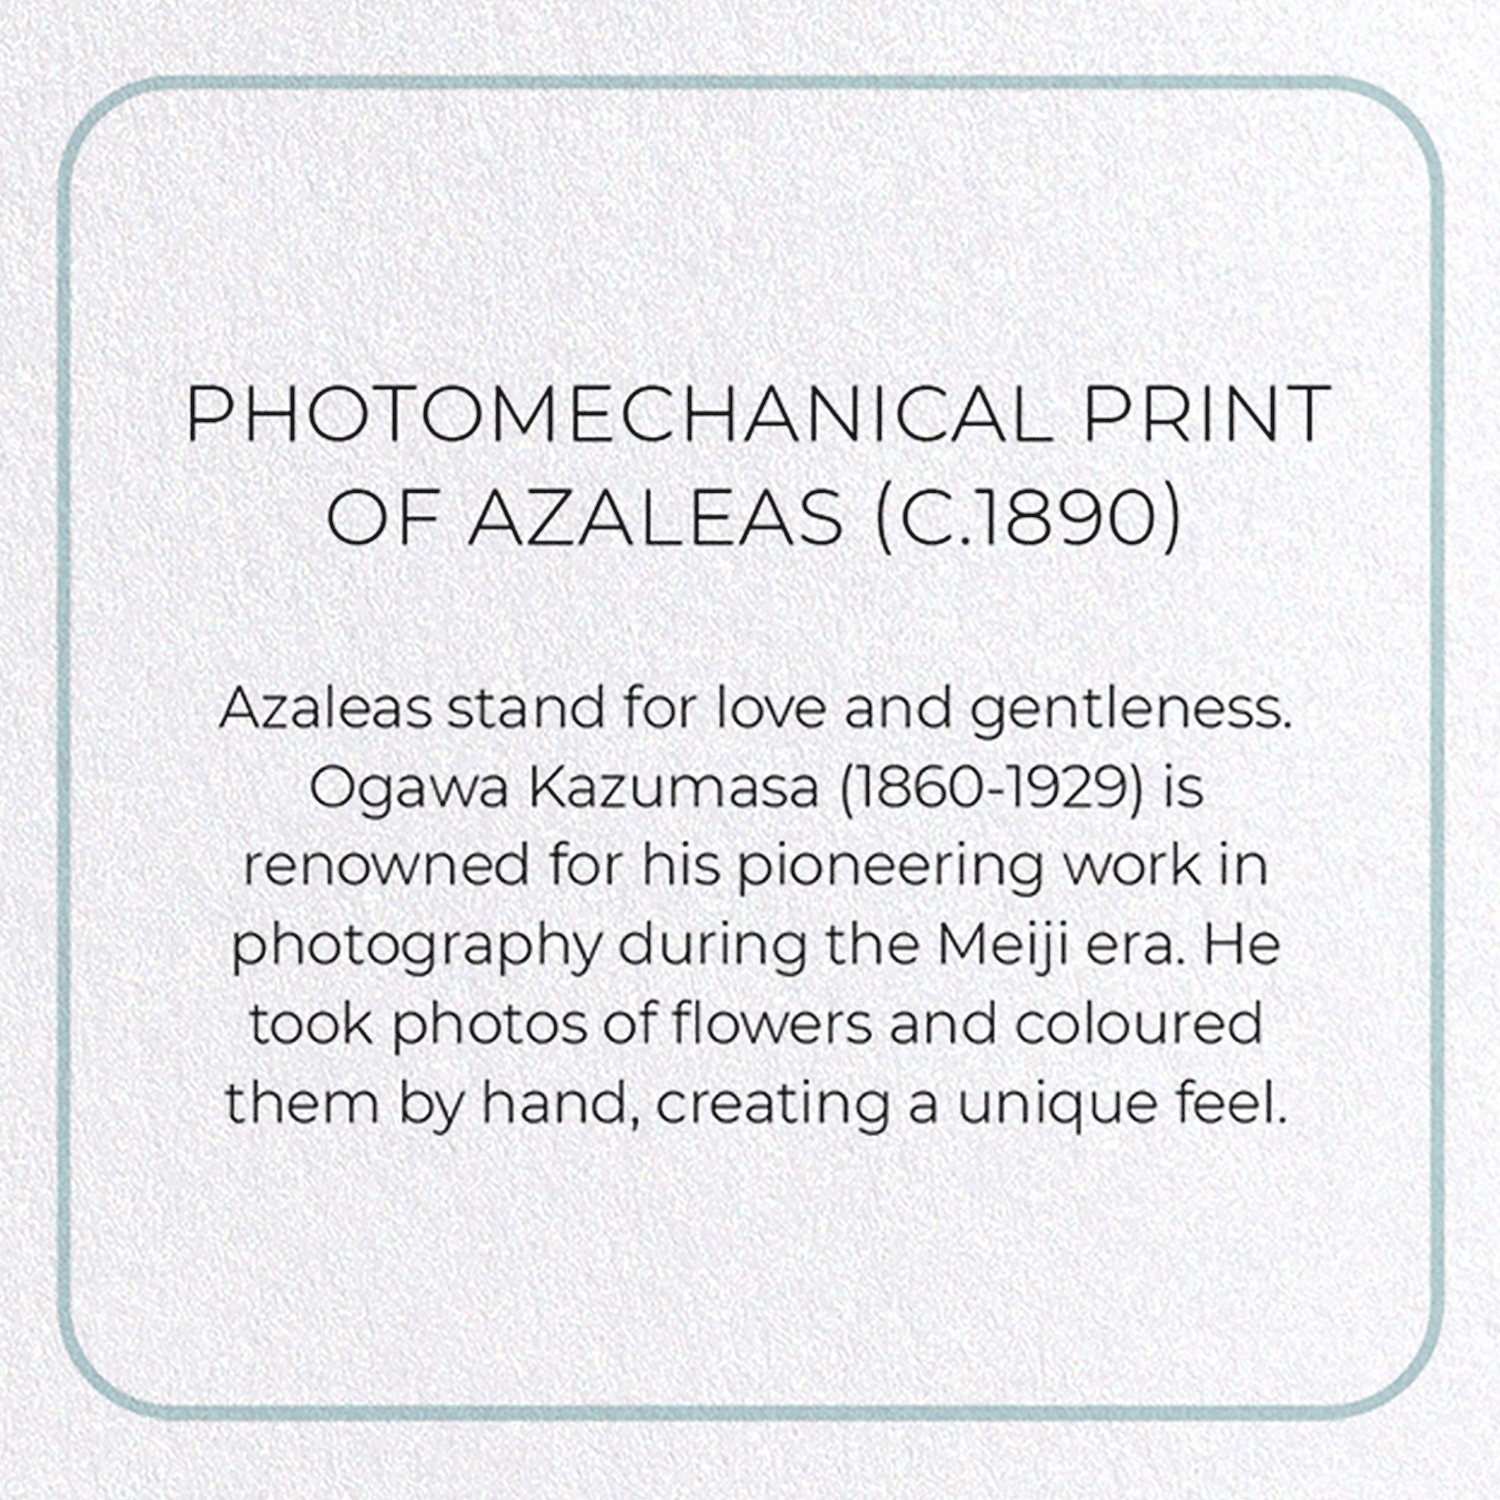 PHOTOMECHANICAL PRINT OF AZALEAS (C.1890)